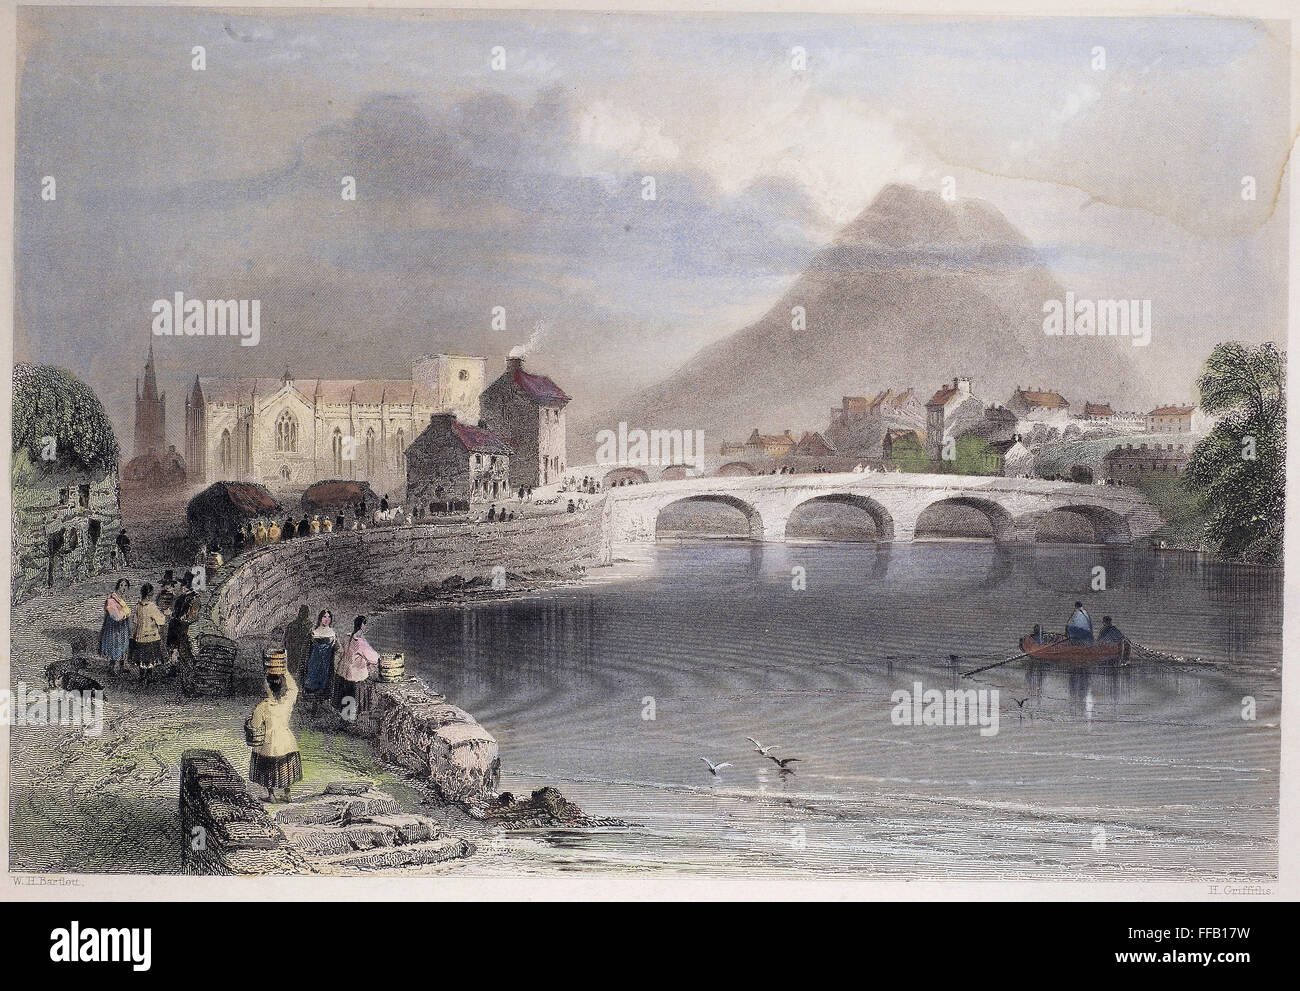 IRELAND, 19th CENTURY. /nBallina, County Mayo, Ireland. Steel engraving, English, c1840, after William Henry Barlett. Stock Photo